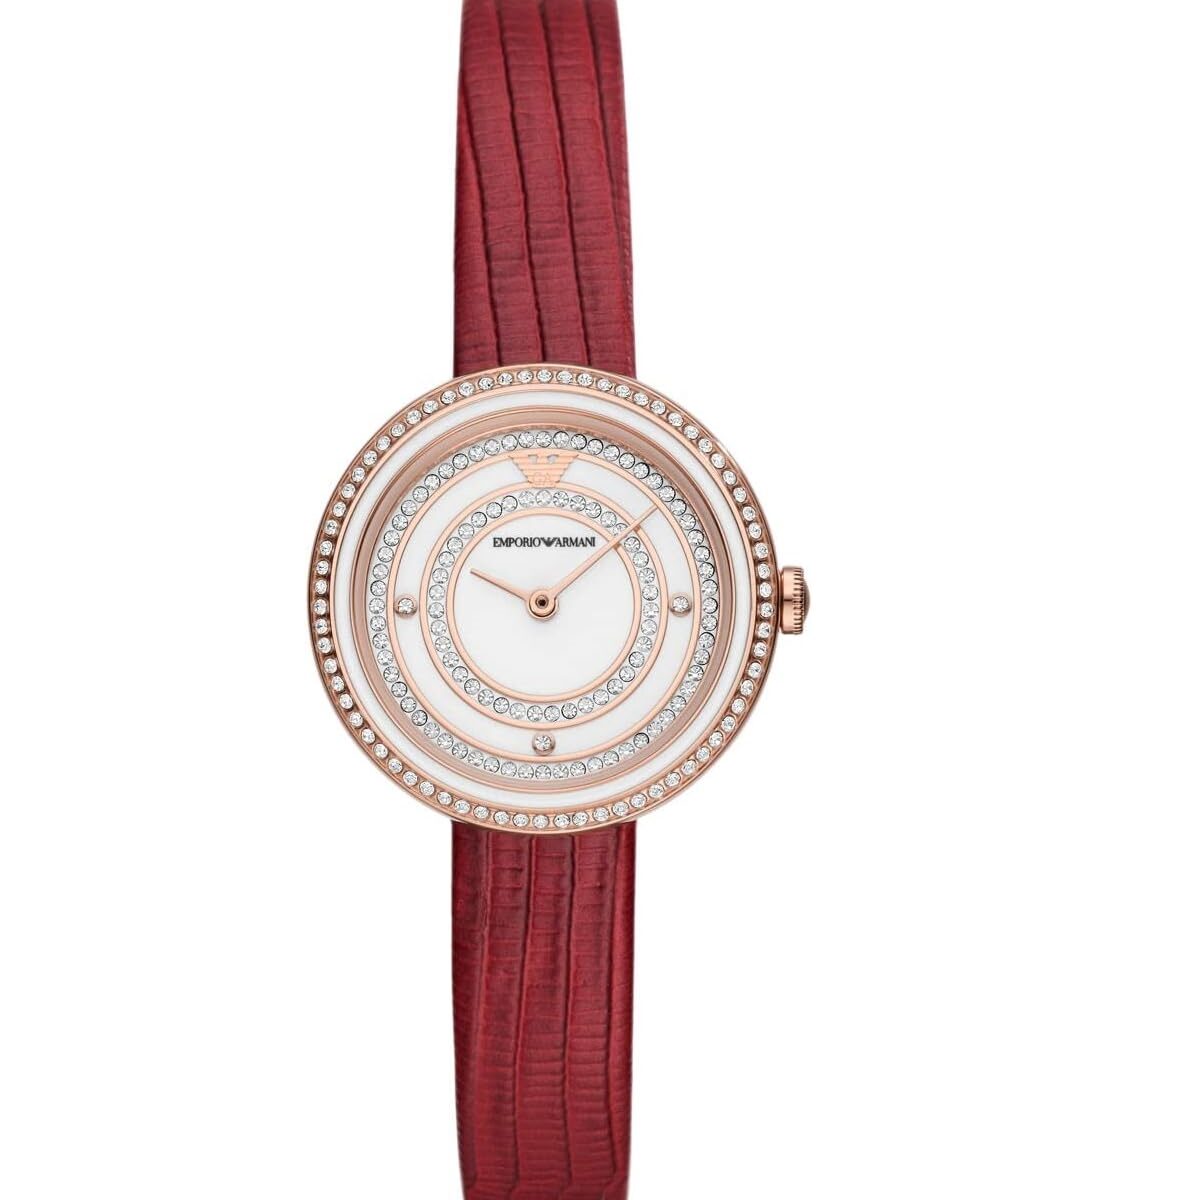 ar11532-emporio-armani-original-women-watch-red-leather-strap-egypt